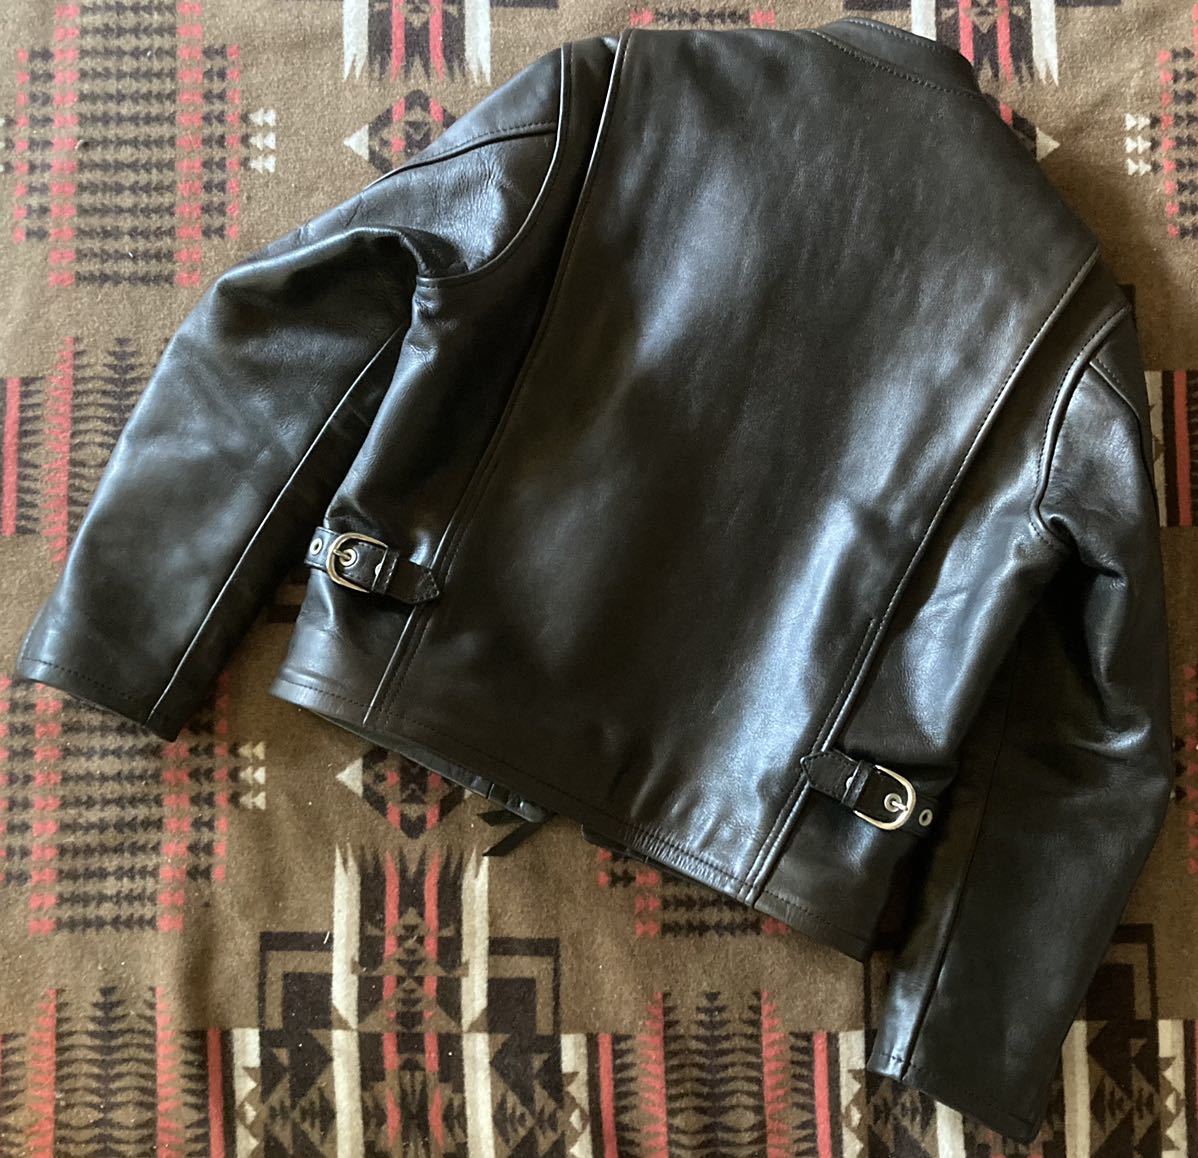 .151800 jpy kadoya Kadoya HF/AS-1VS head Factory made in Japan single black rider's jacket cow leather leather jacket original leather black leather jacket Z143